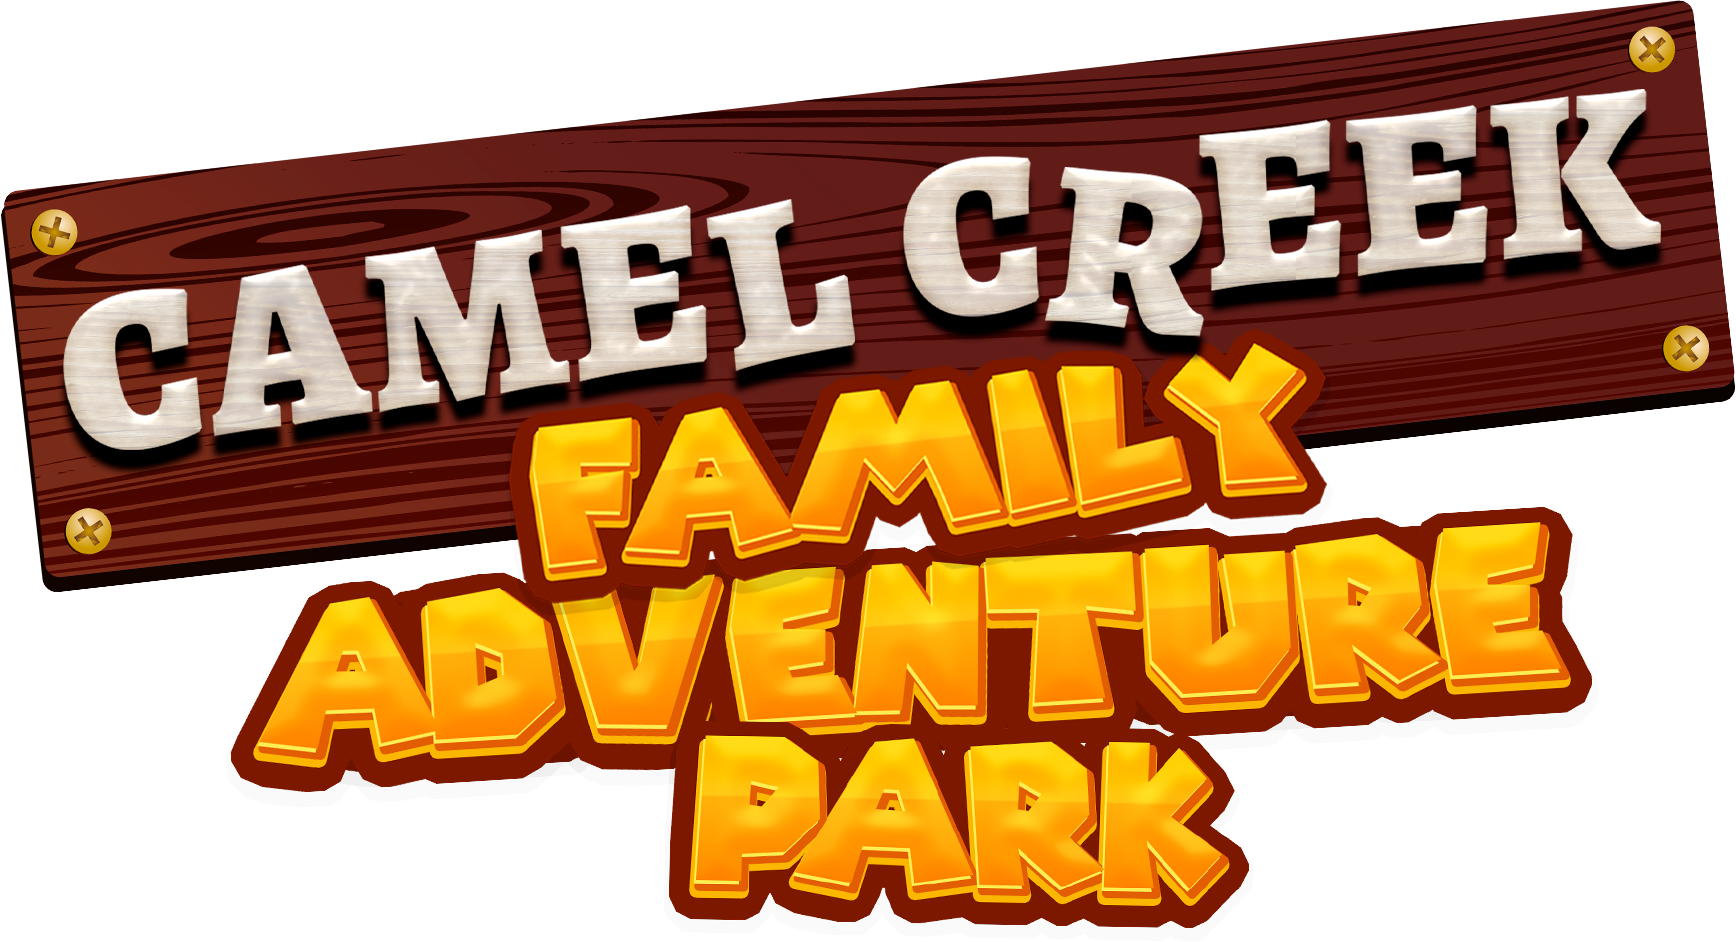 camel-creek-new-logo